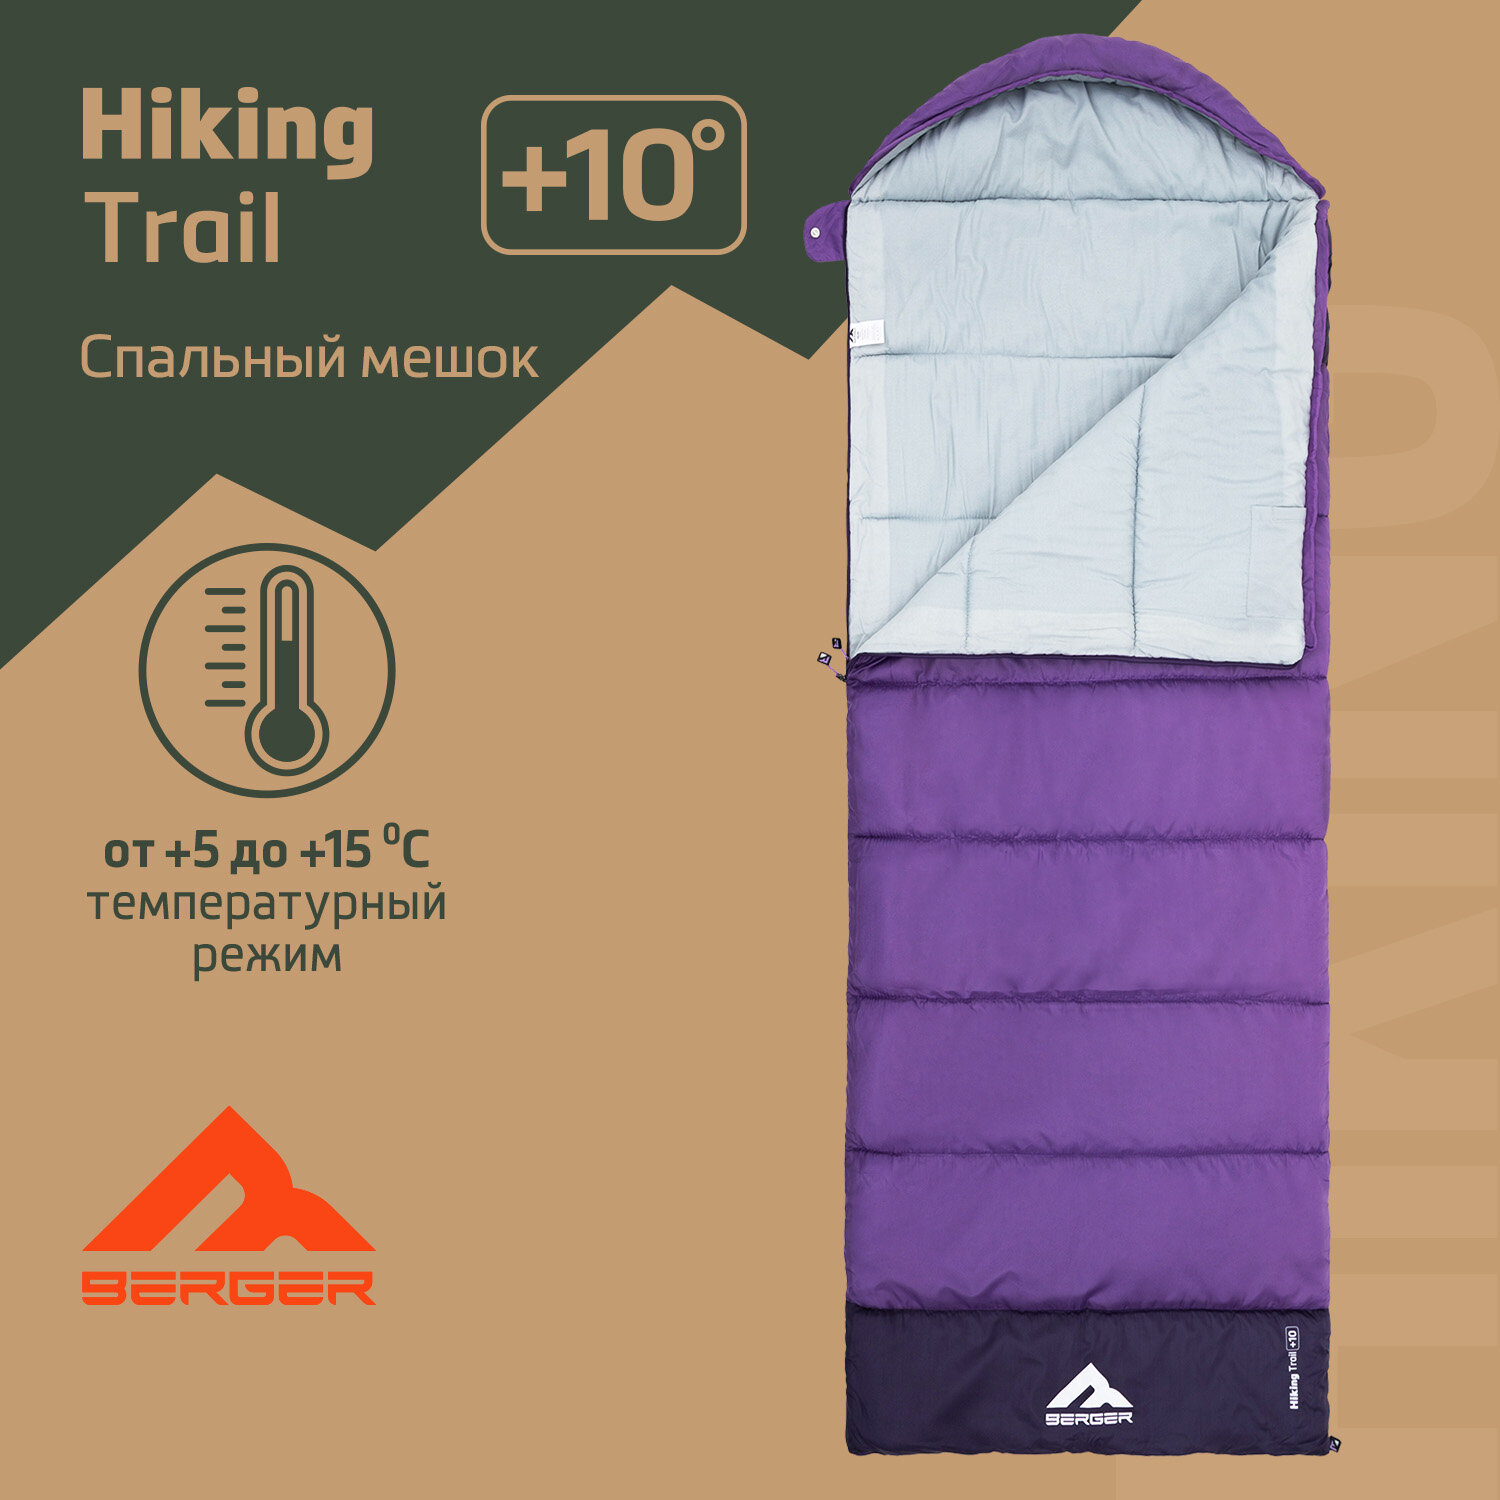 Спальный мешок Berger Hiking Trail +10 BHTR24SB-01, лавандовый